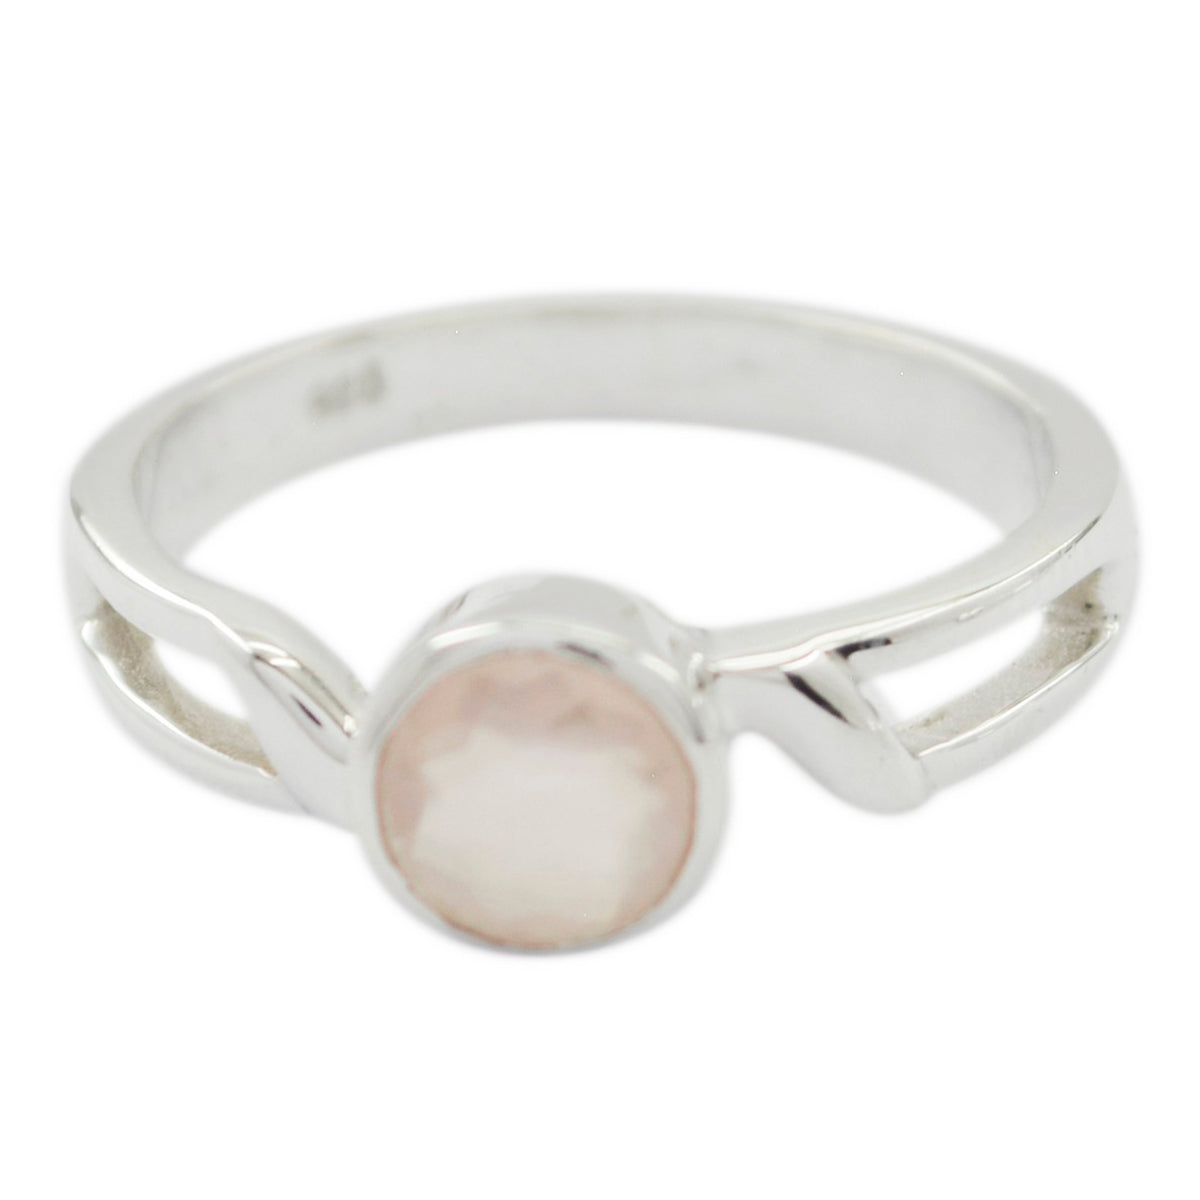 Riyo Fair Gemstones Rose Quartz 925 Sterling Silver Ring Jewelry